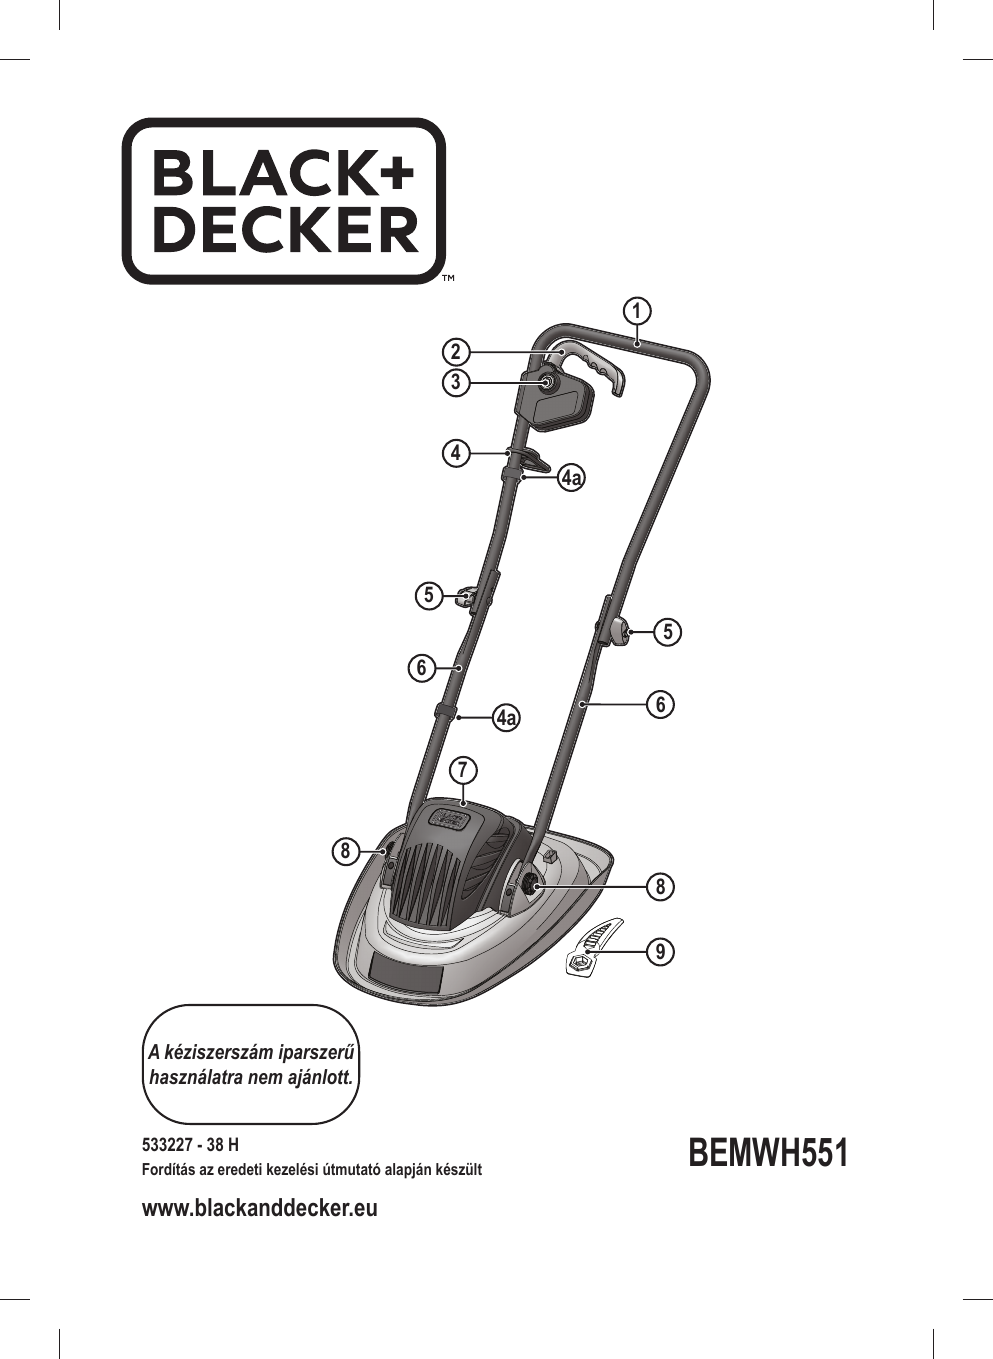 BLACK DECKER BEGAS5800 Garden Shredder Instruction Manual